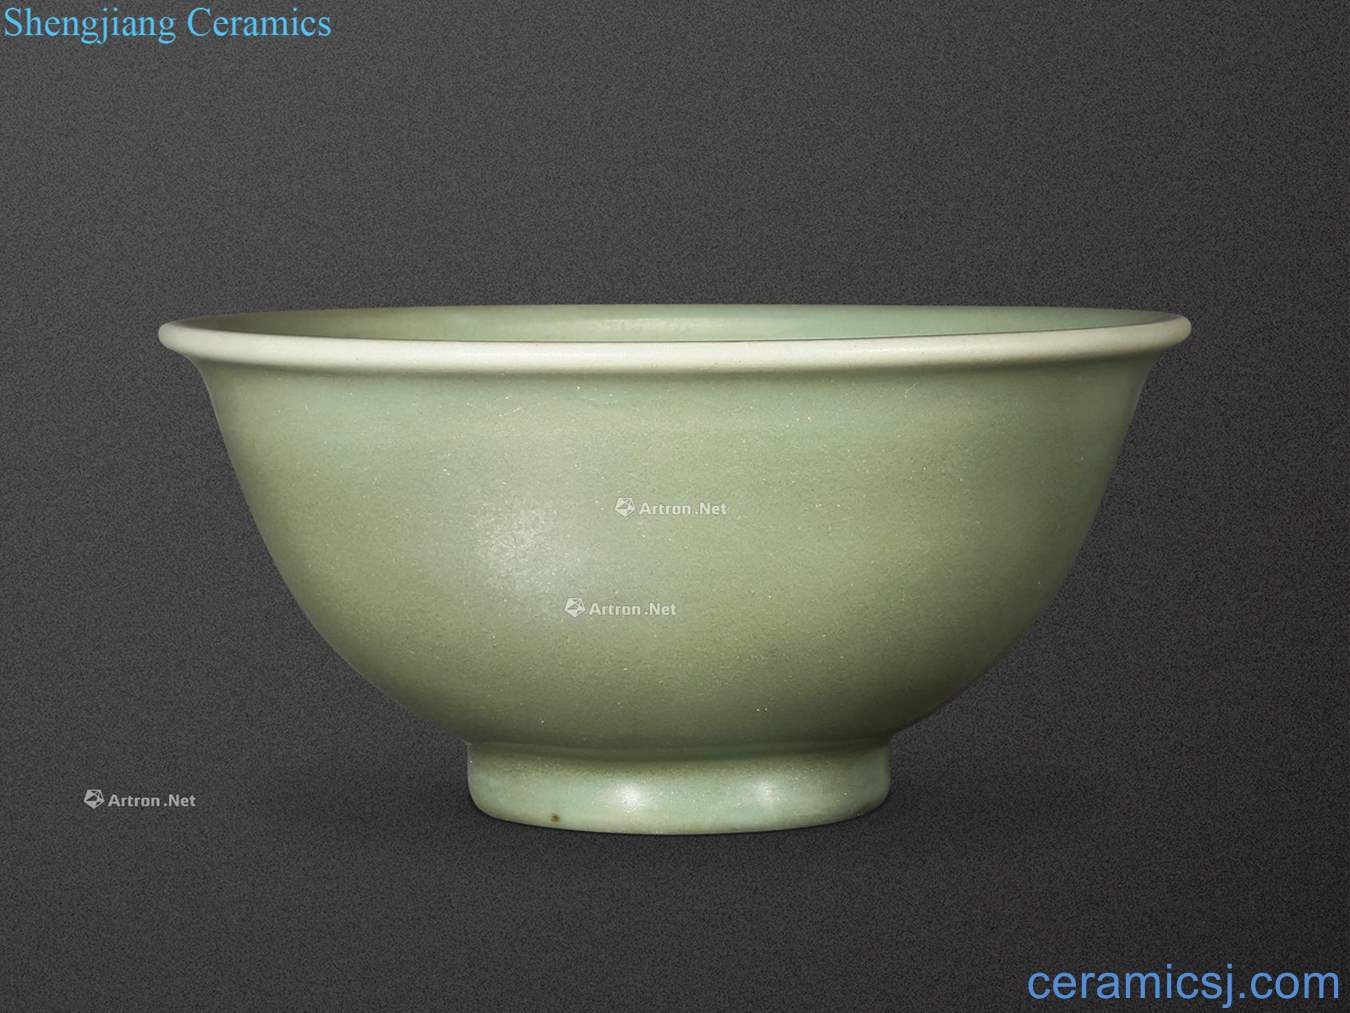 Early Ming dynasty Longquan celadon glaze bowls